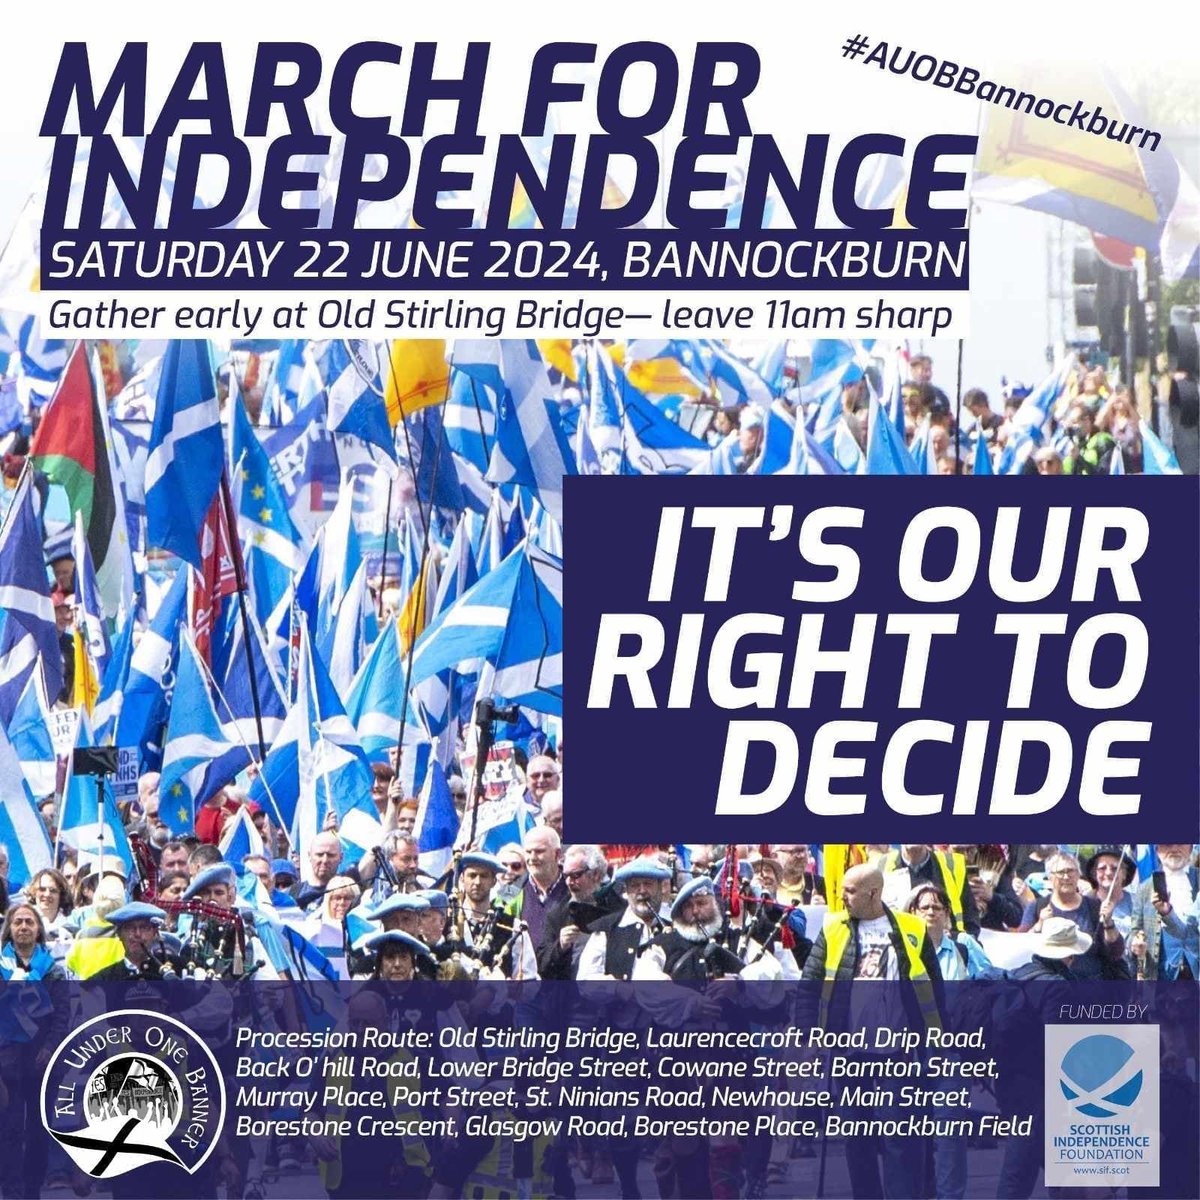 MARCH FOR INDEPENDENCE 🏴󠁧󠁢󠁳󠁣󠁴󠁿 BANNOCKBURN ⚔️ SATURDAY 22 JUNE #AUOBBannockburn